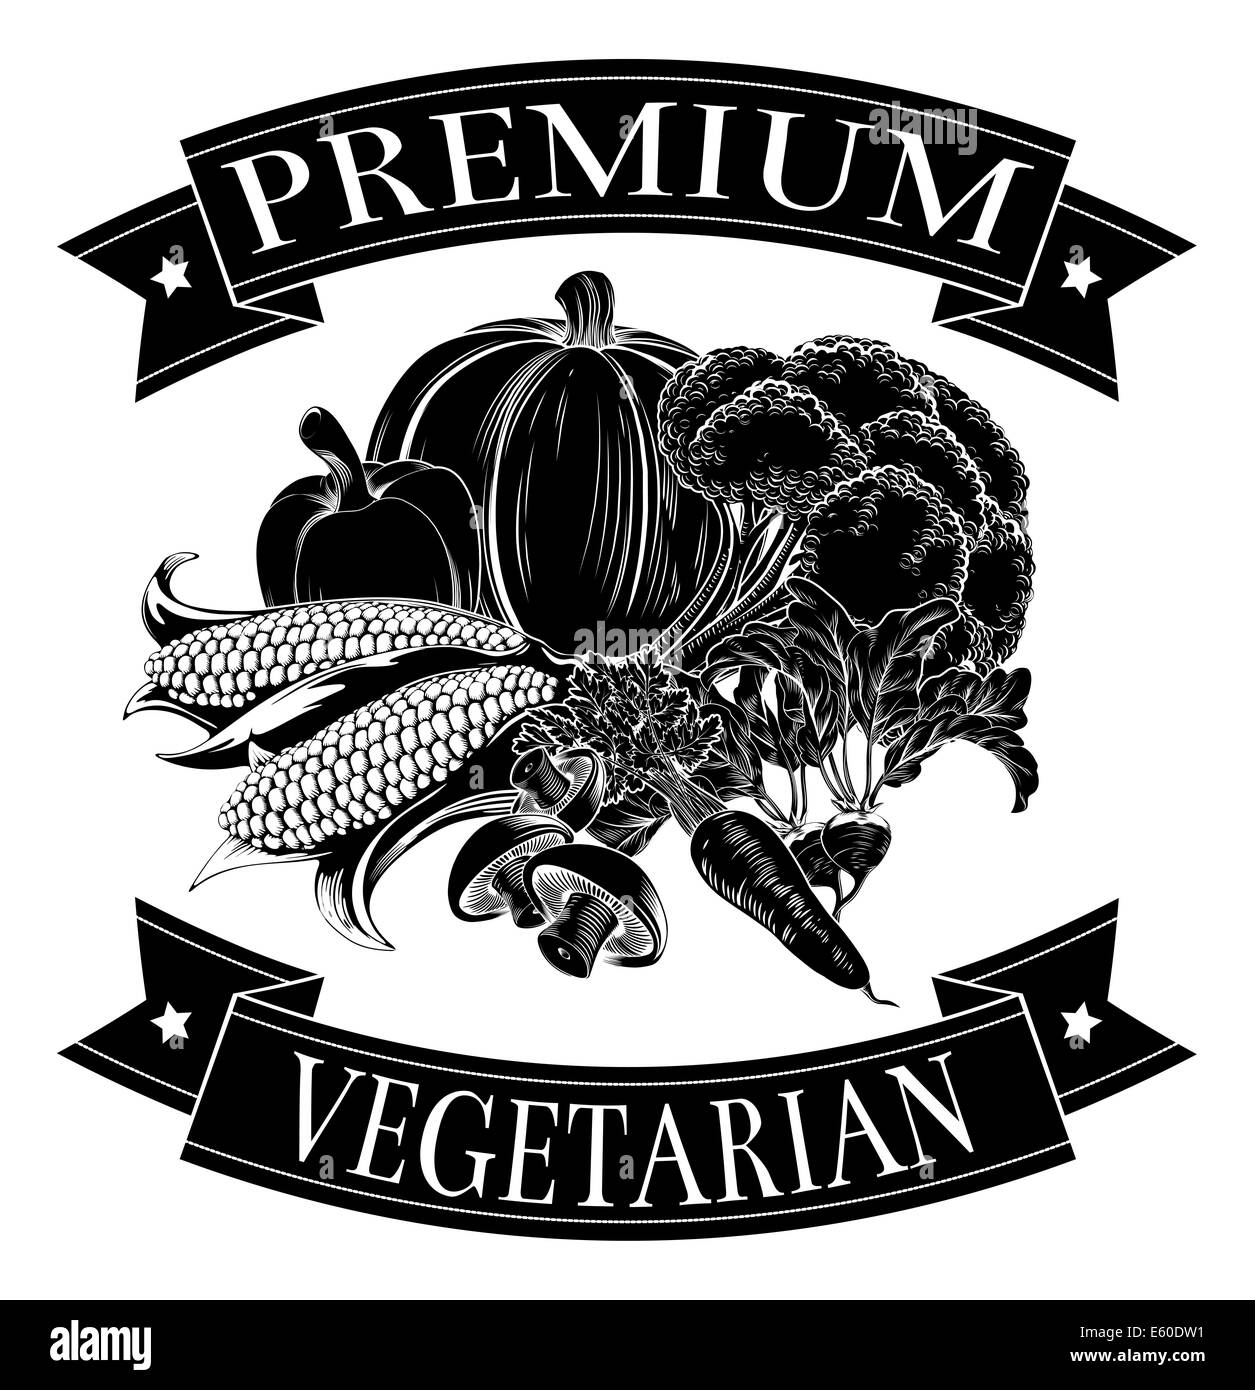 Premium vegetarian food label of fresh vegetables Stock Photo